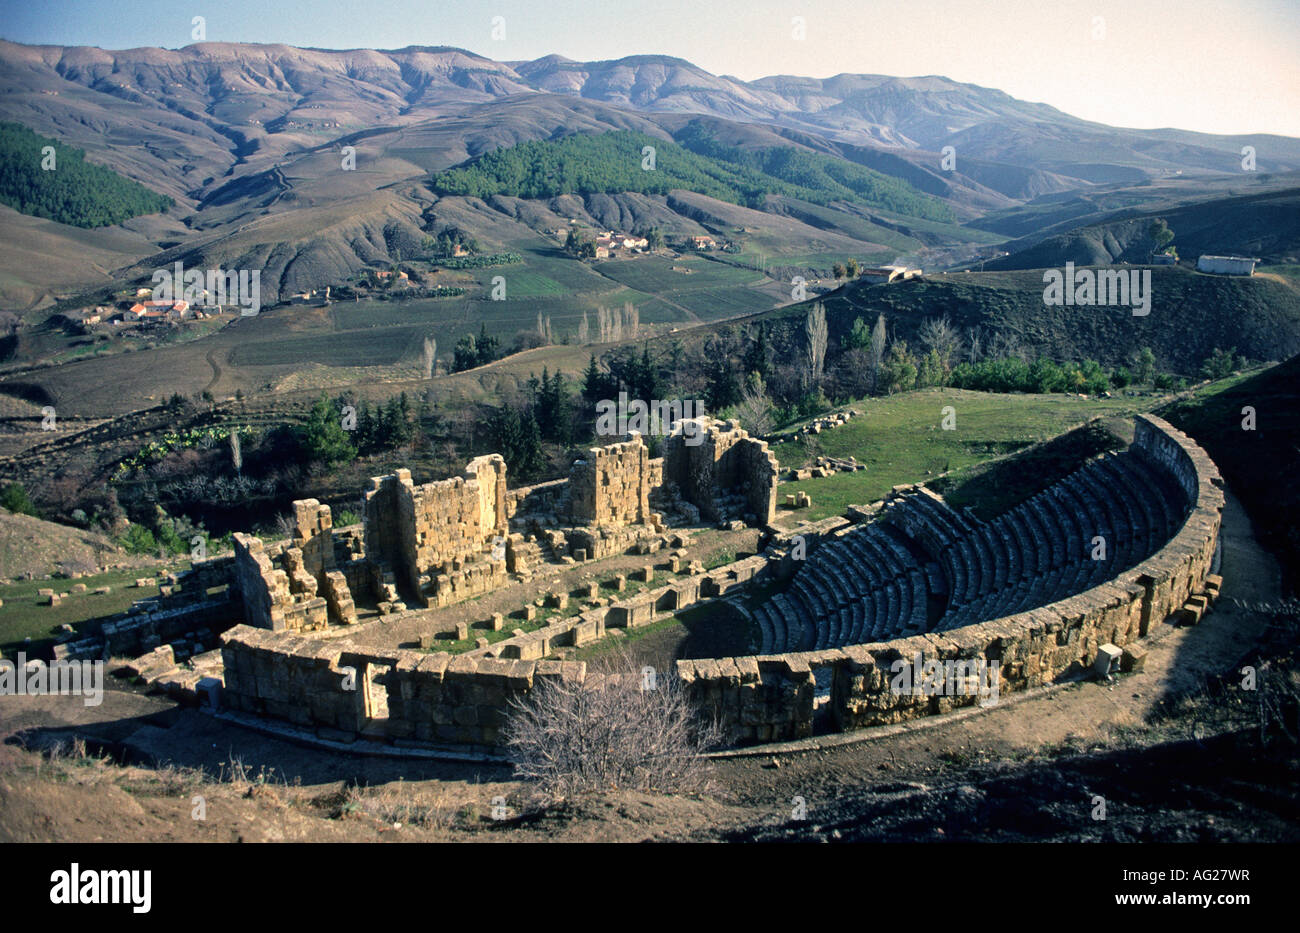 Algeria Djemila Roman ruins of amphitheatre and mountains Stock Photo